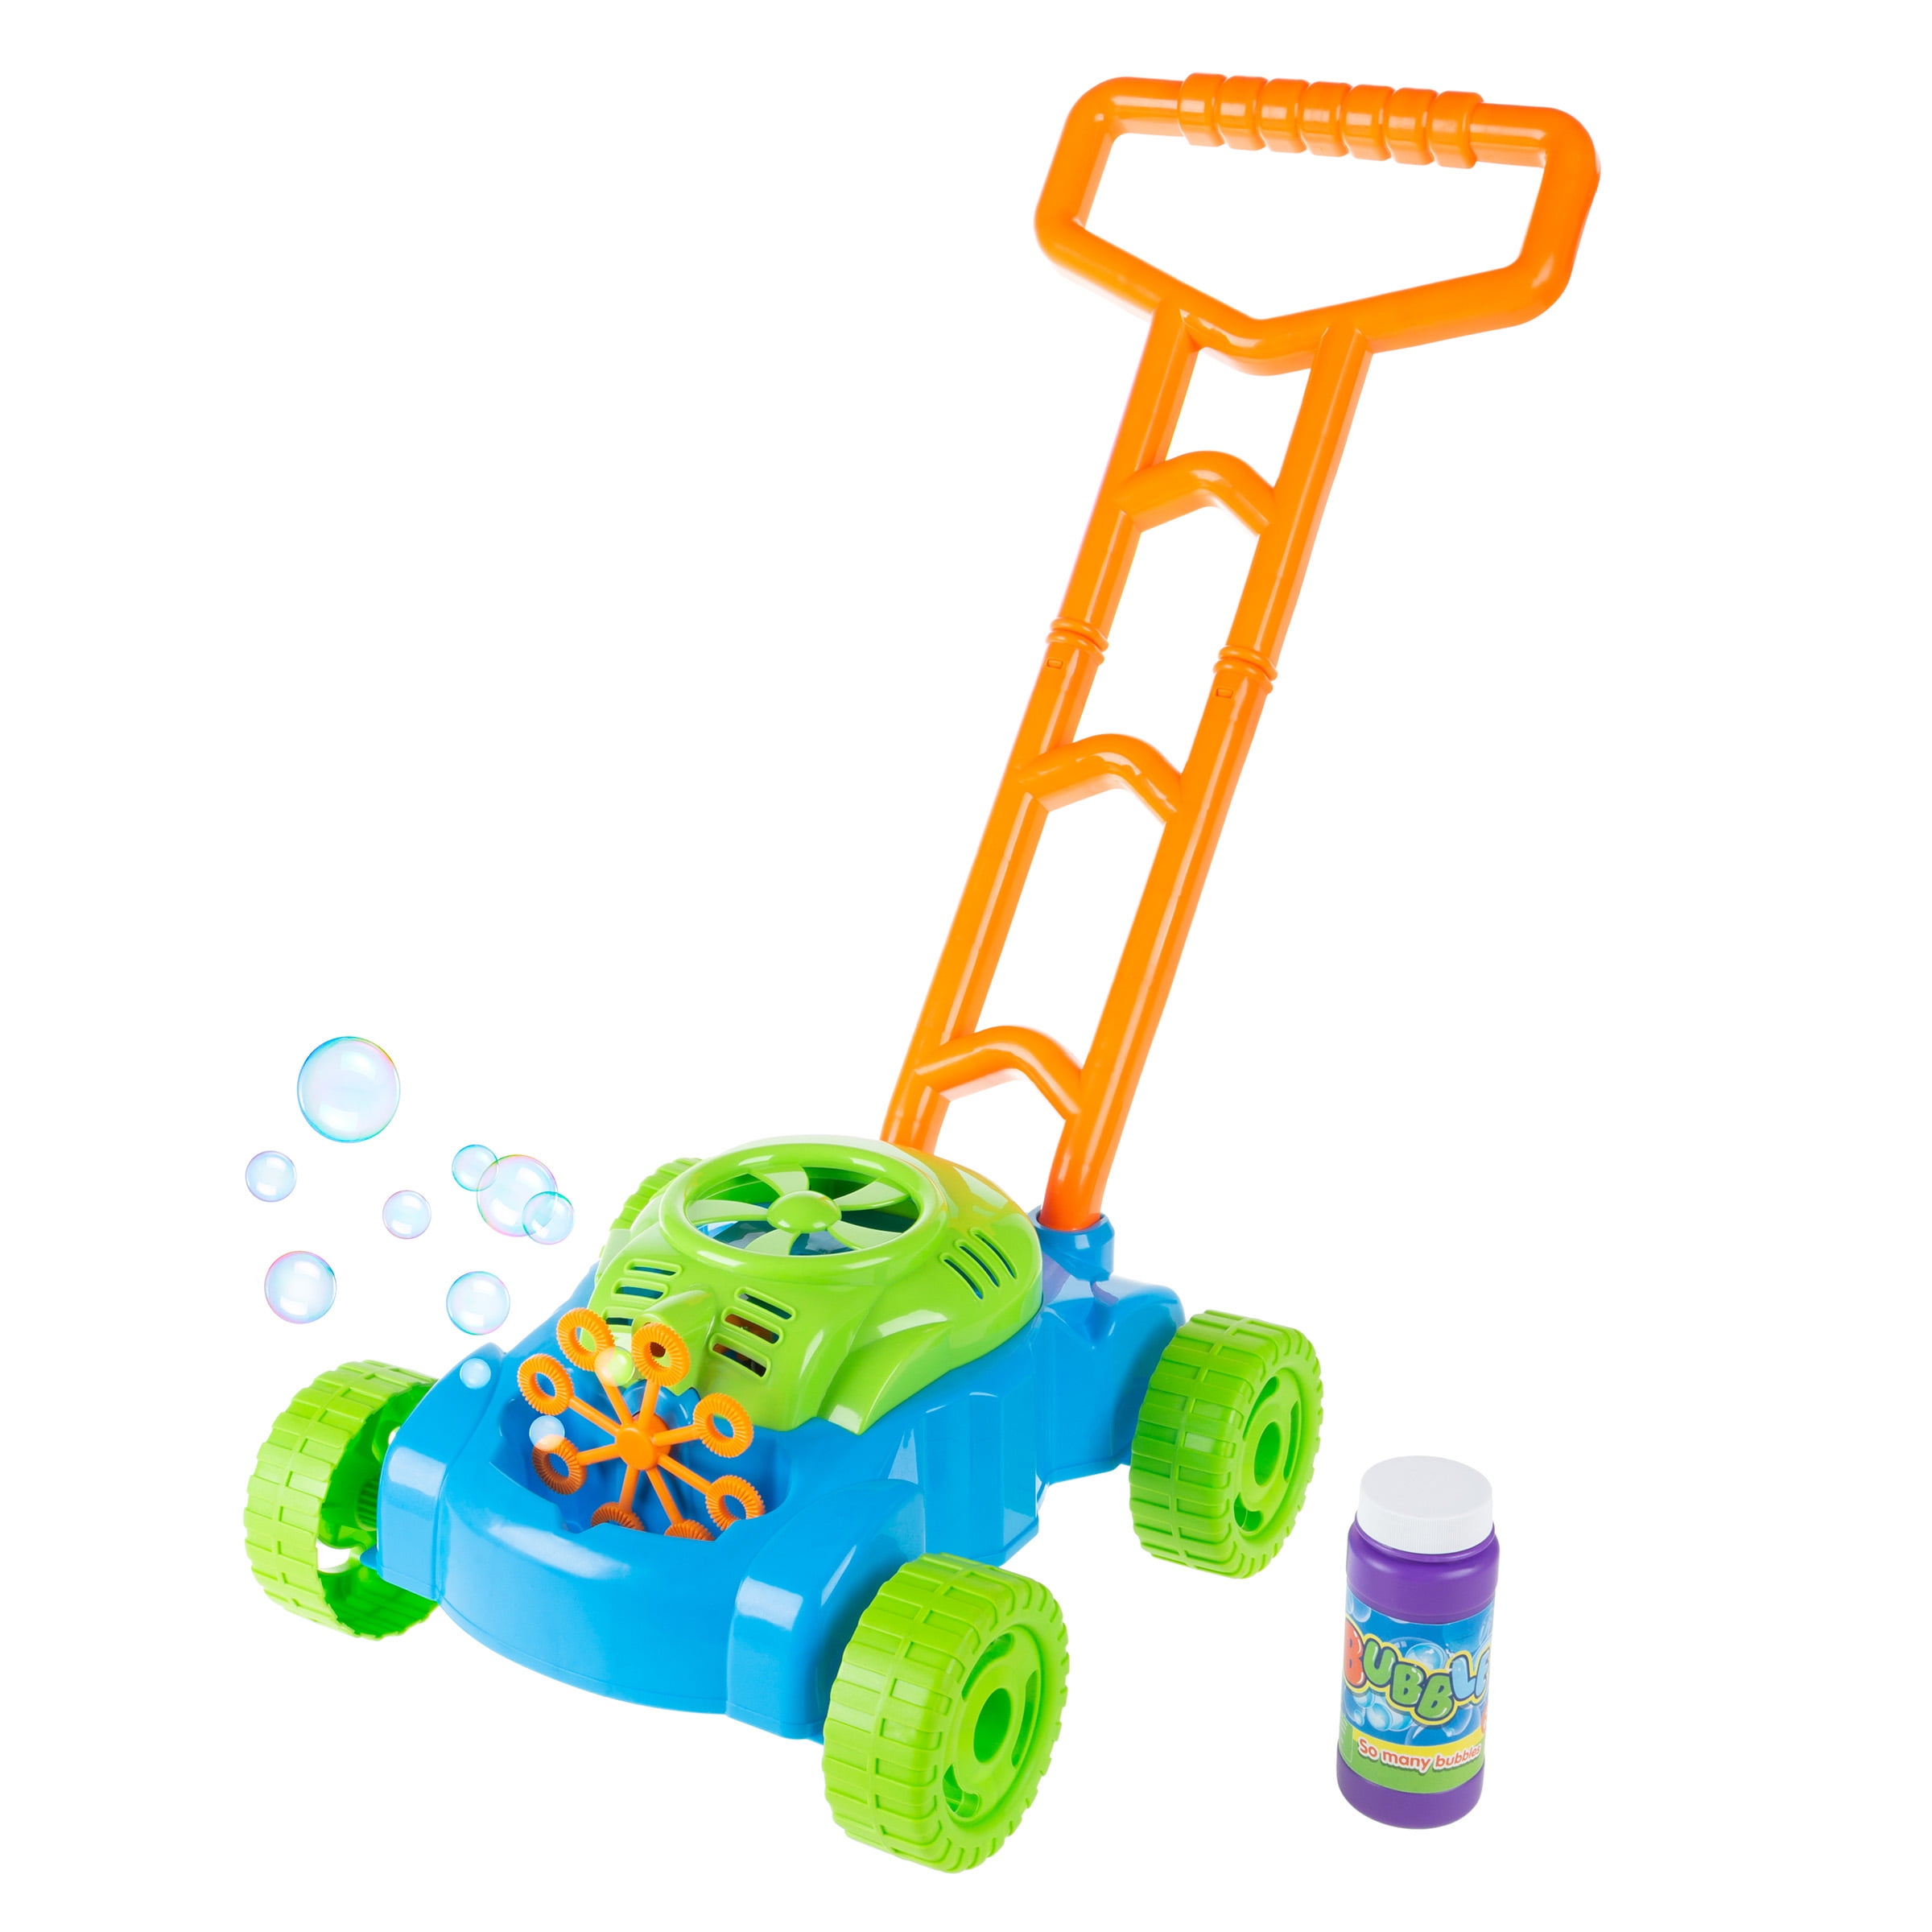 Details about   ToyVelt Bubble Lawn Mower for Kids Automatic Bubble Machine with Music Sounds 